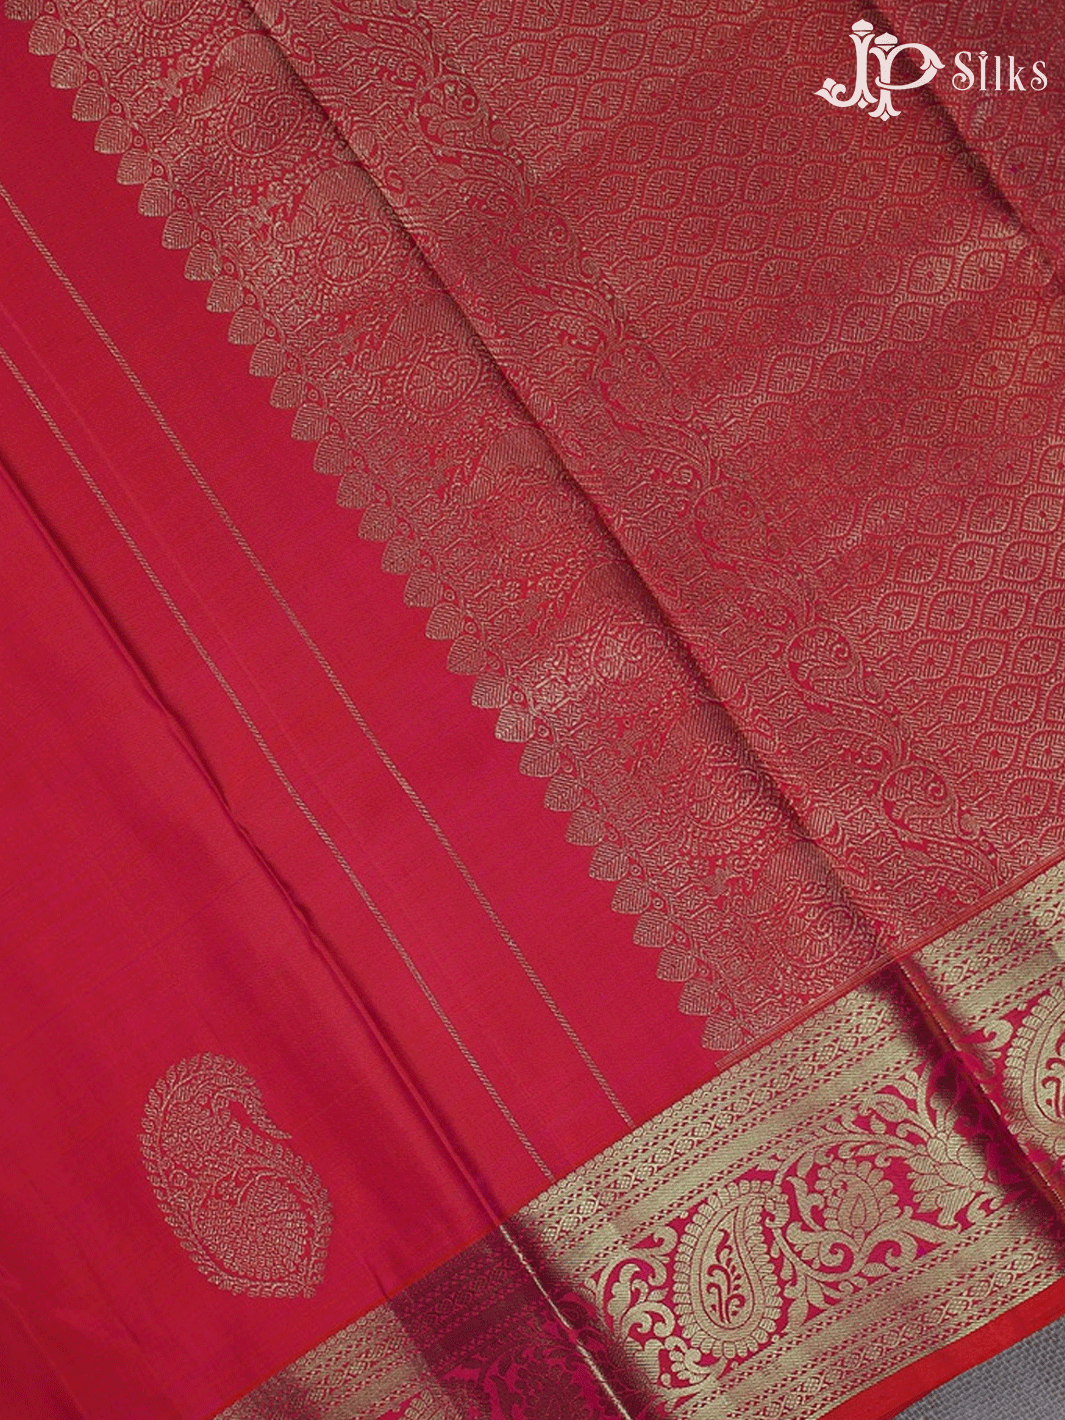 Pinkish Red Paisley Motif Kanchipuram Silk Saree - A1328 - View 6